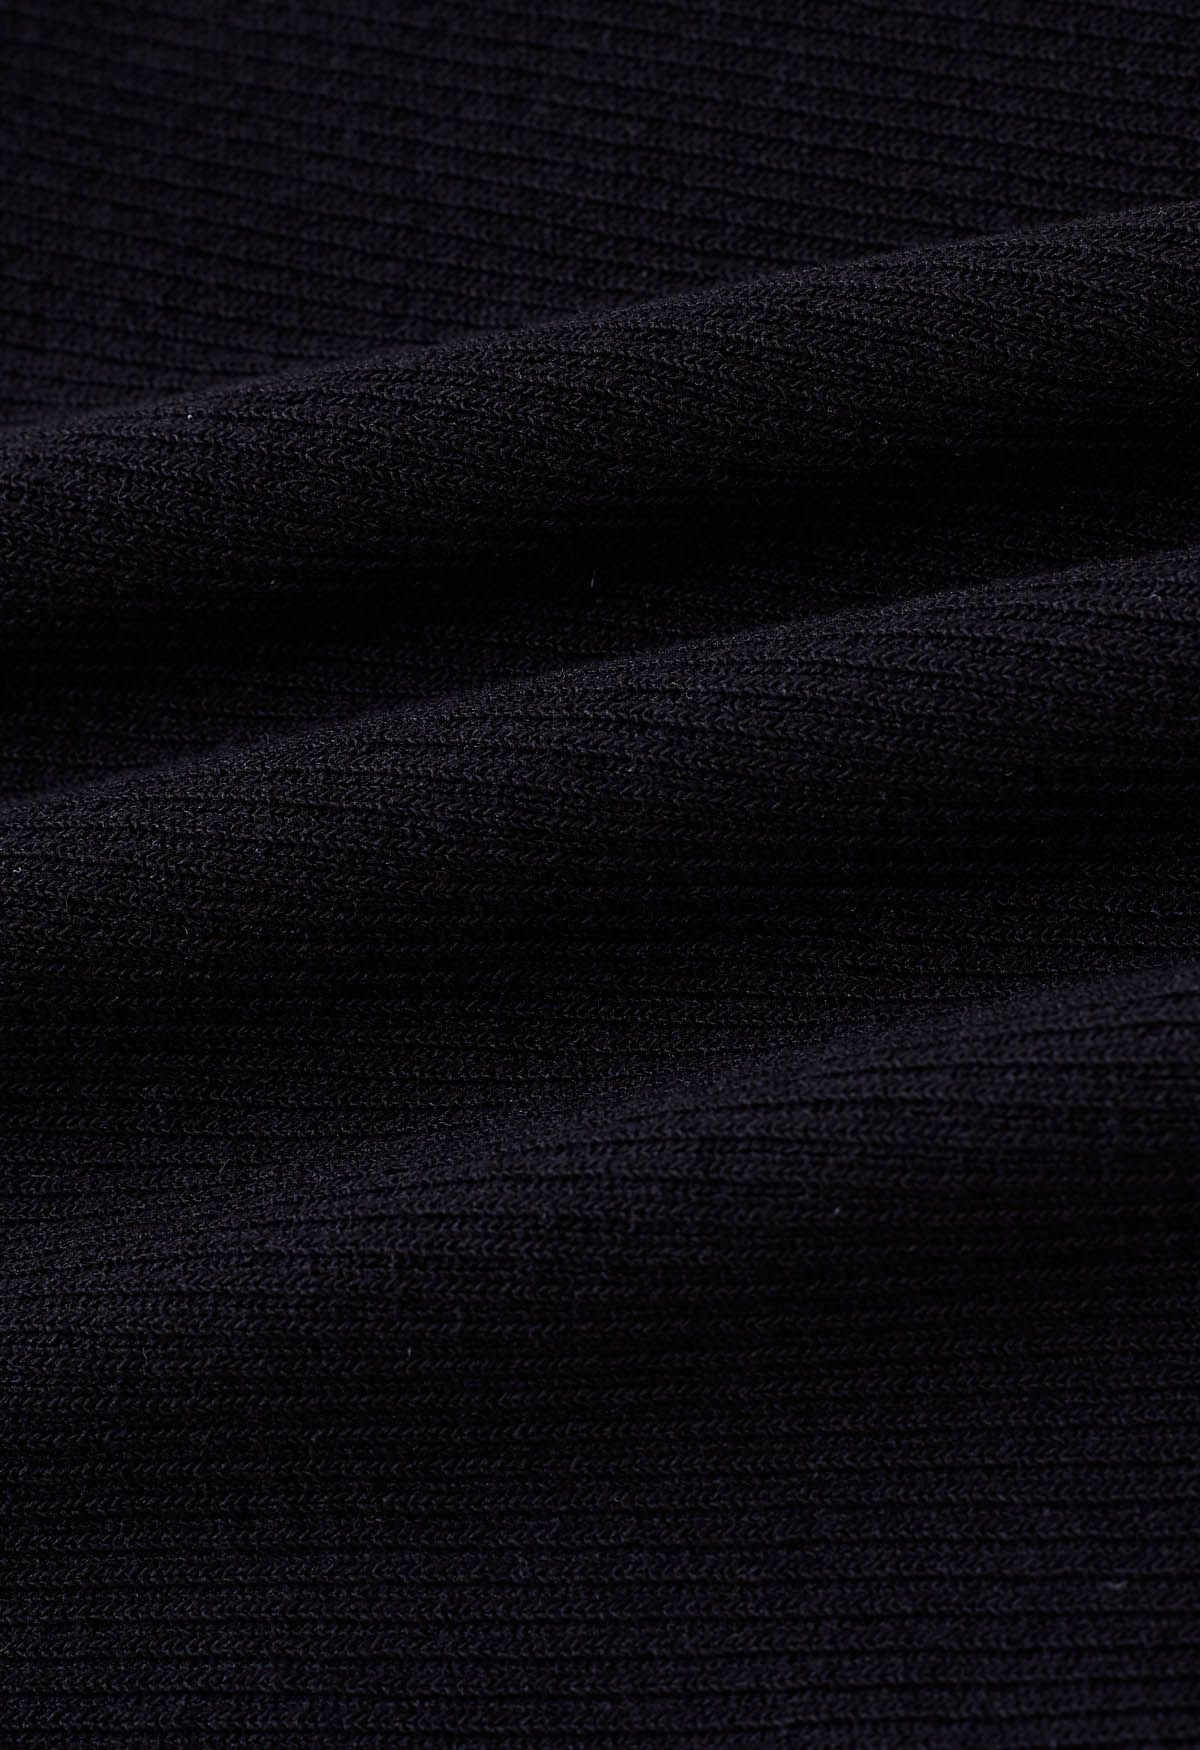 Bowknot Cutout Back Spliced Knit Top in Black